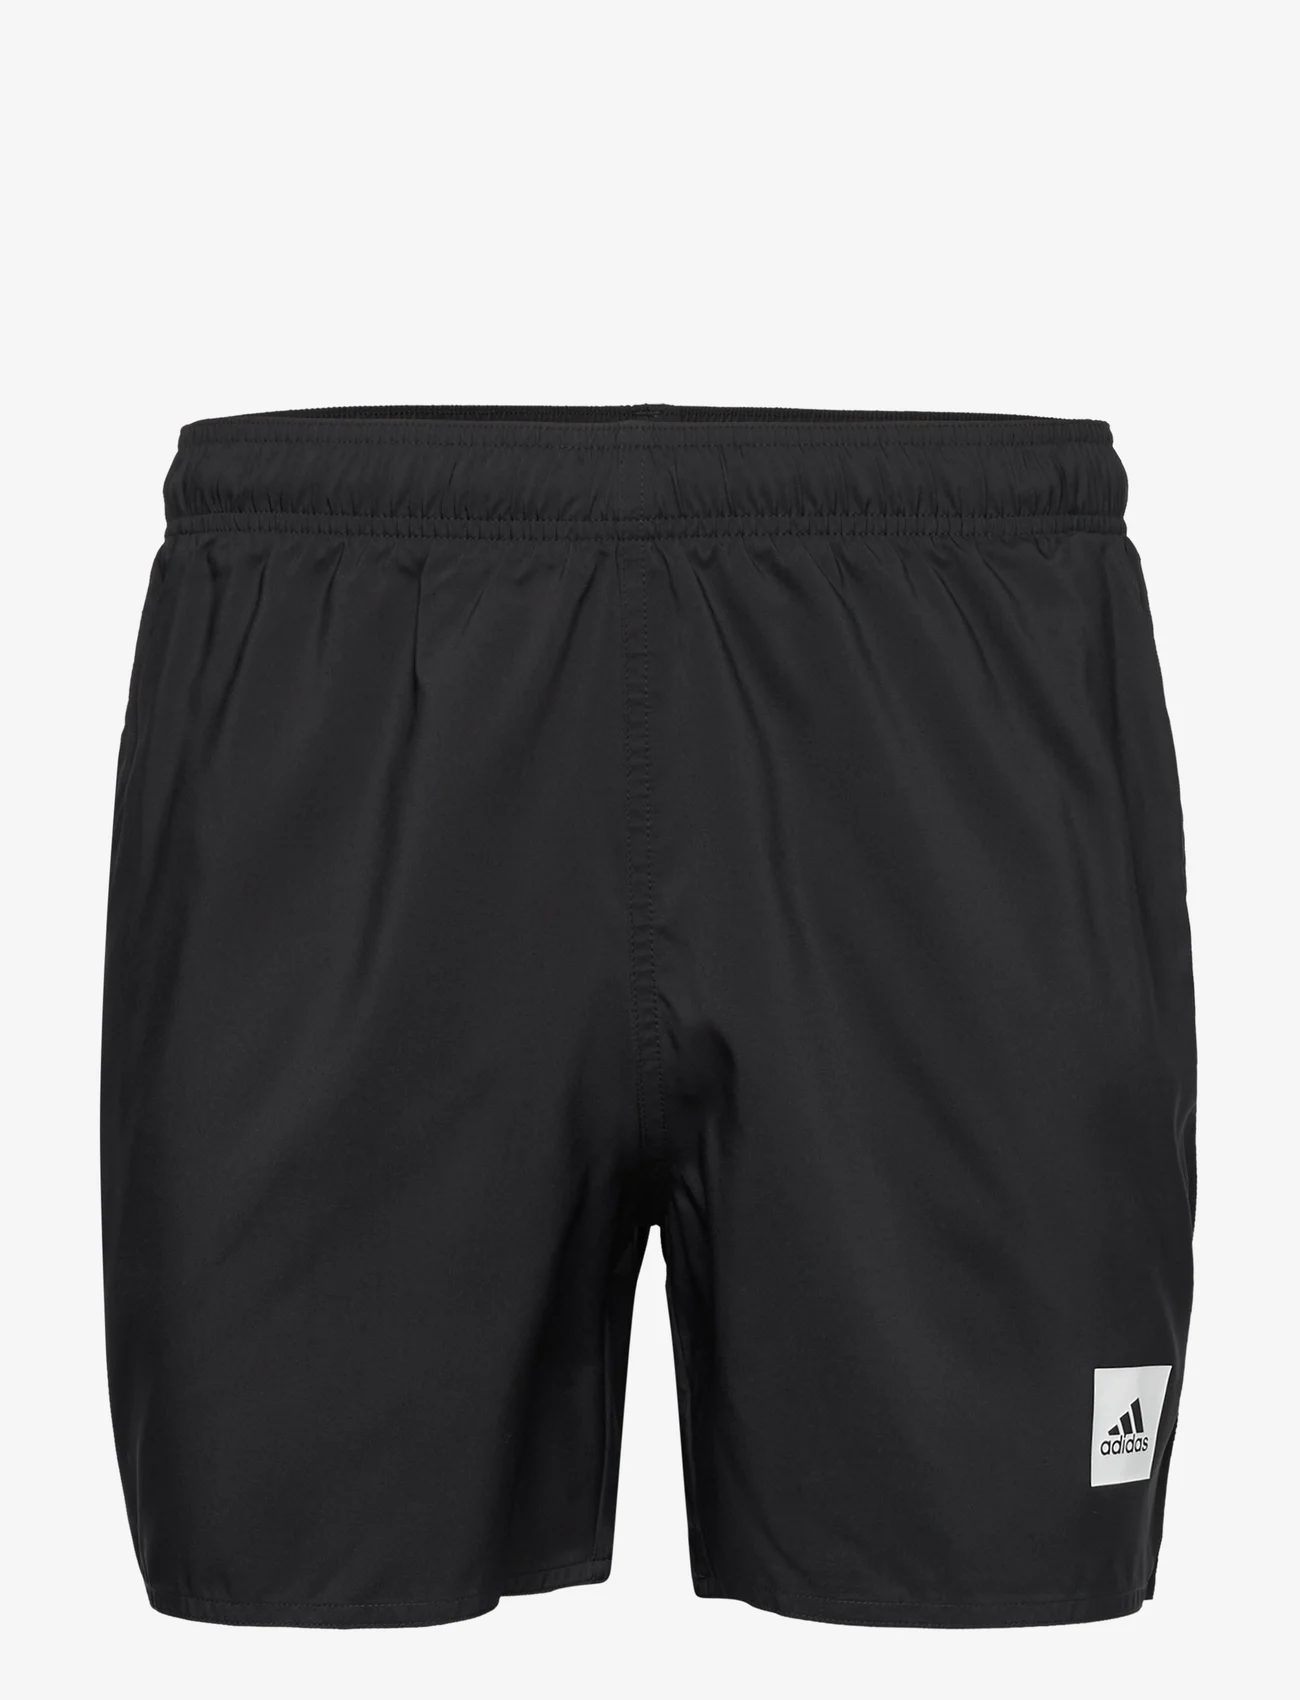 adidas Performance - Short Length Solid Swim Shorts - black - 0